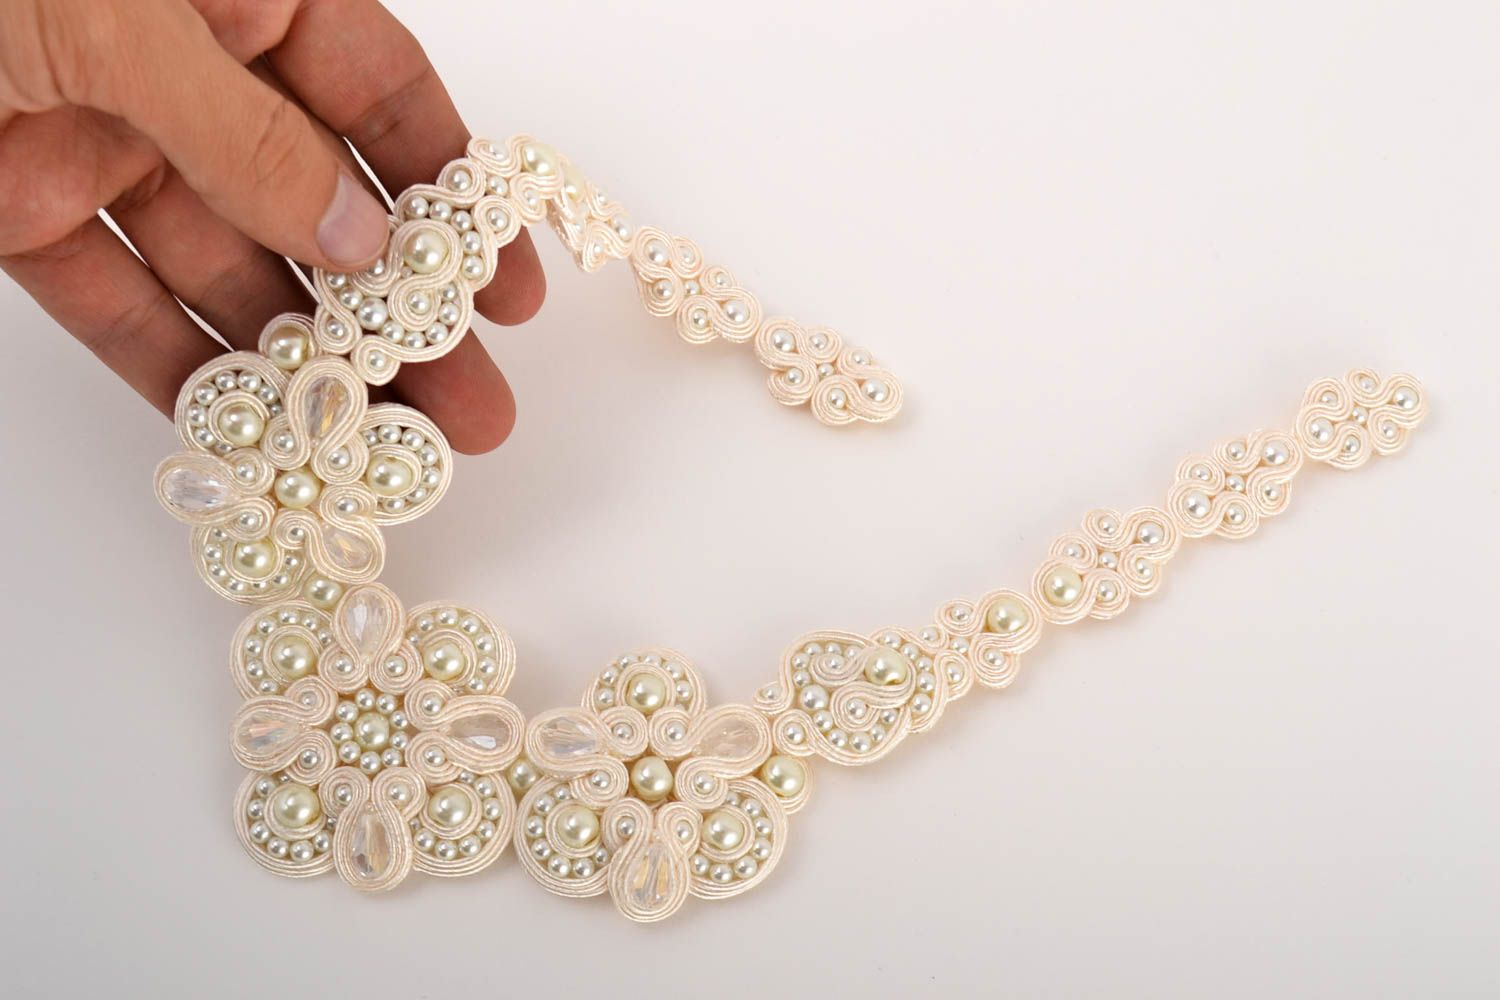 Handmade beautiful necklace designer accessories massive stylish jewelry photo 5